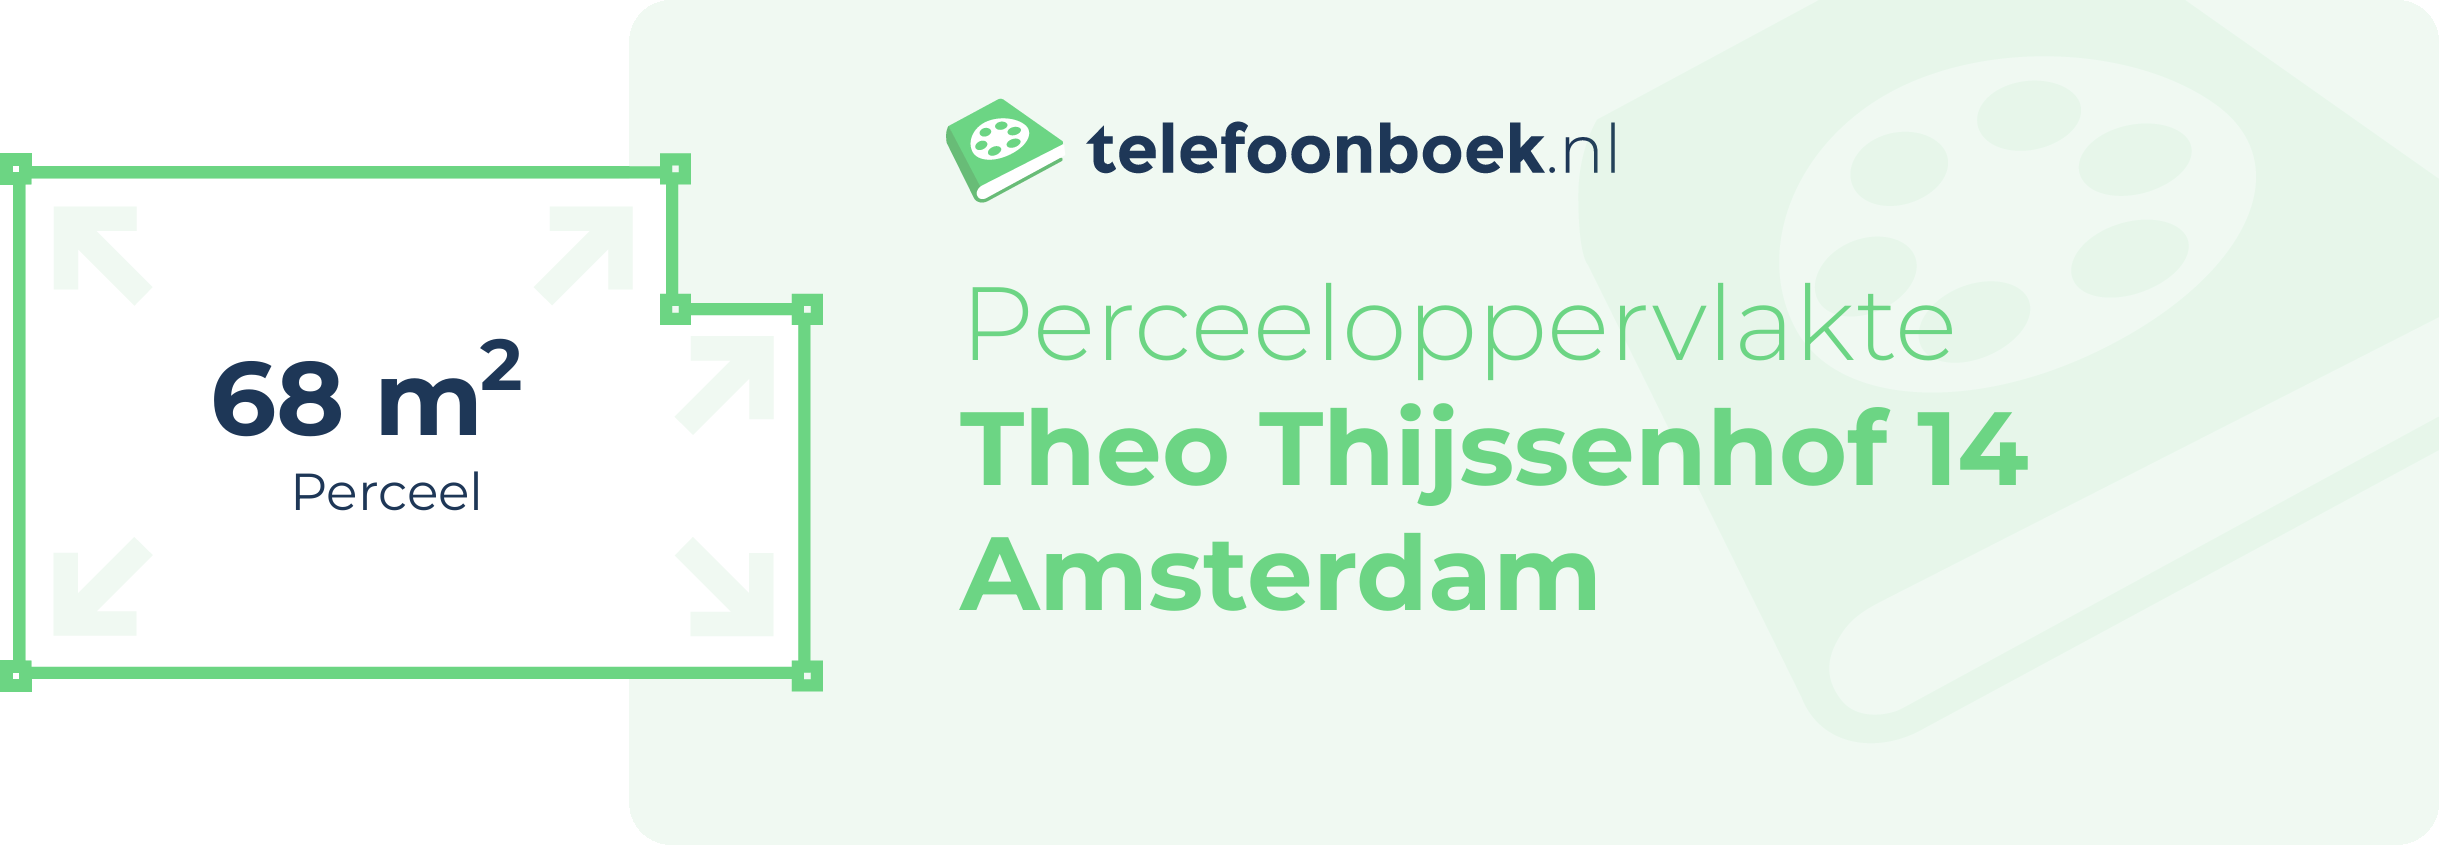 Perceeloppervlakte Theo Thijssenhof 14 Amsterdam